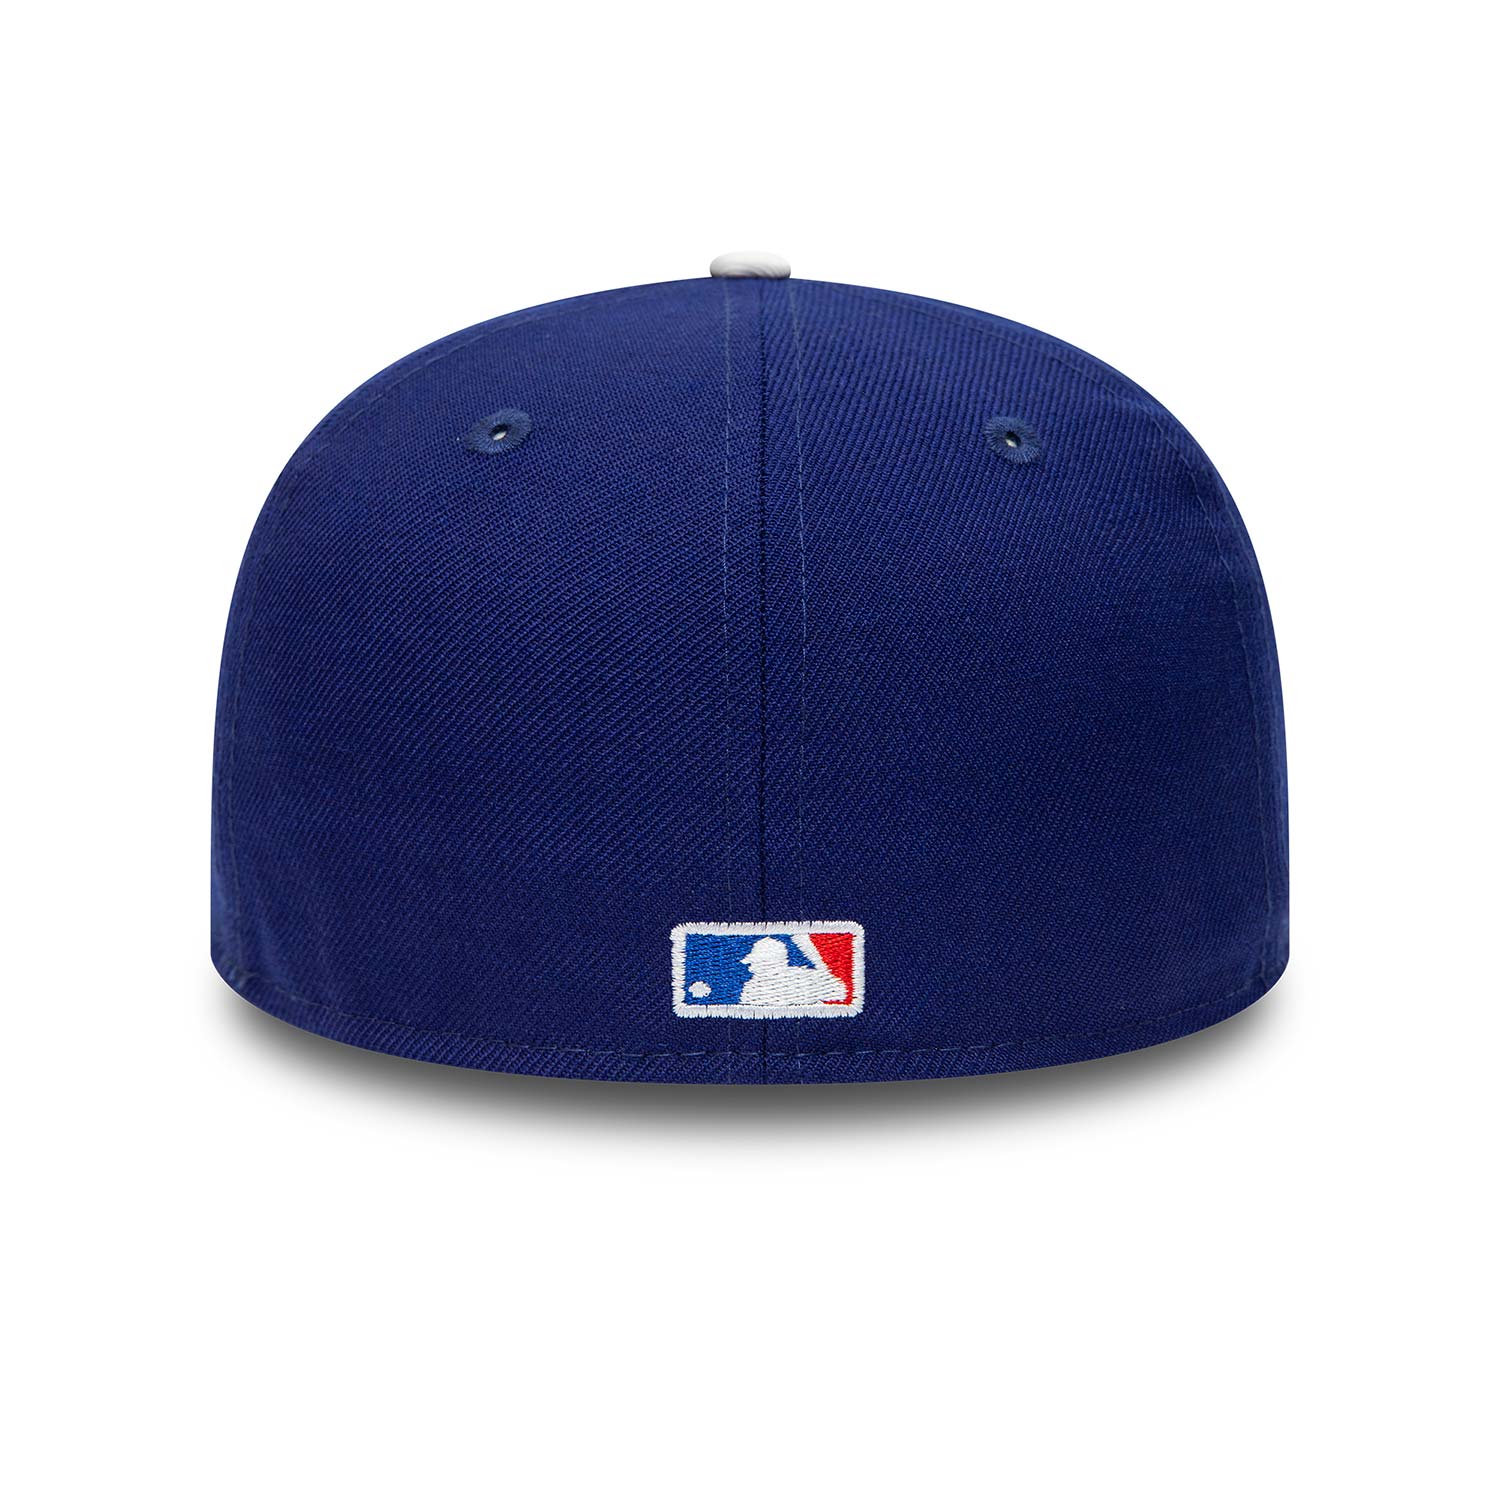 LA Dodgers Premium Wool Blue 59FIFTY Fitted Cap